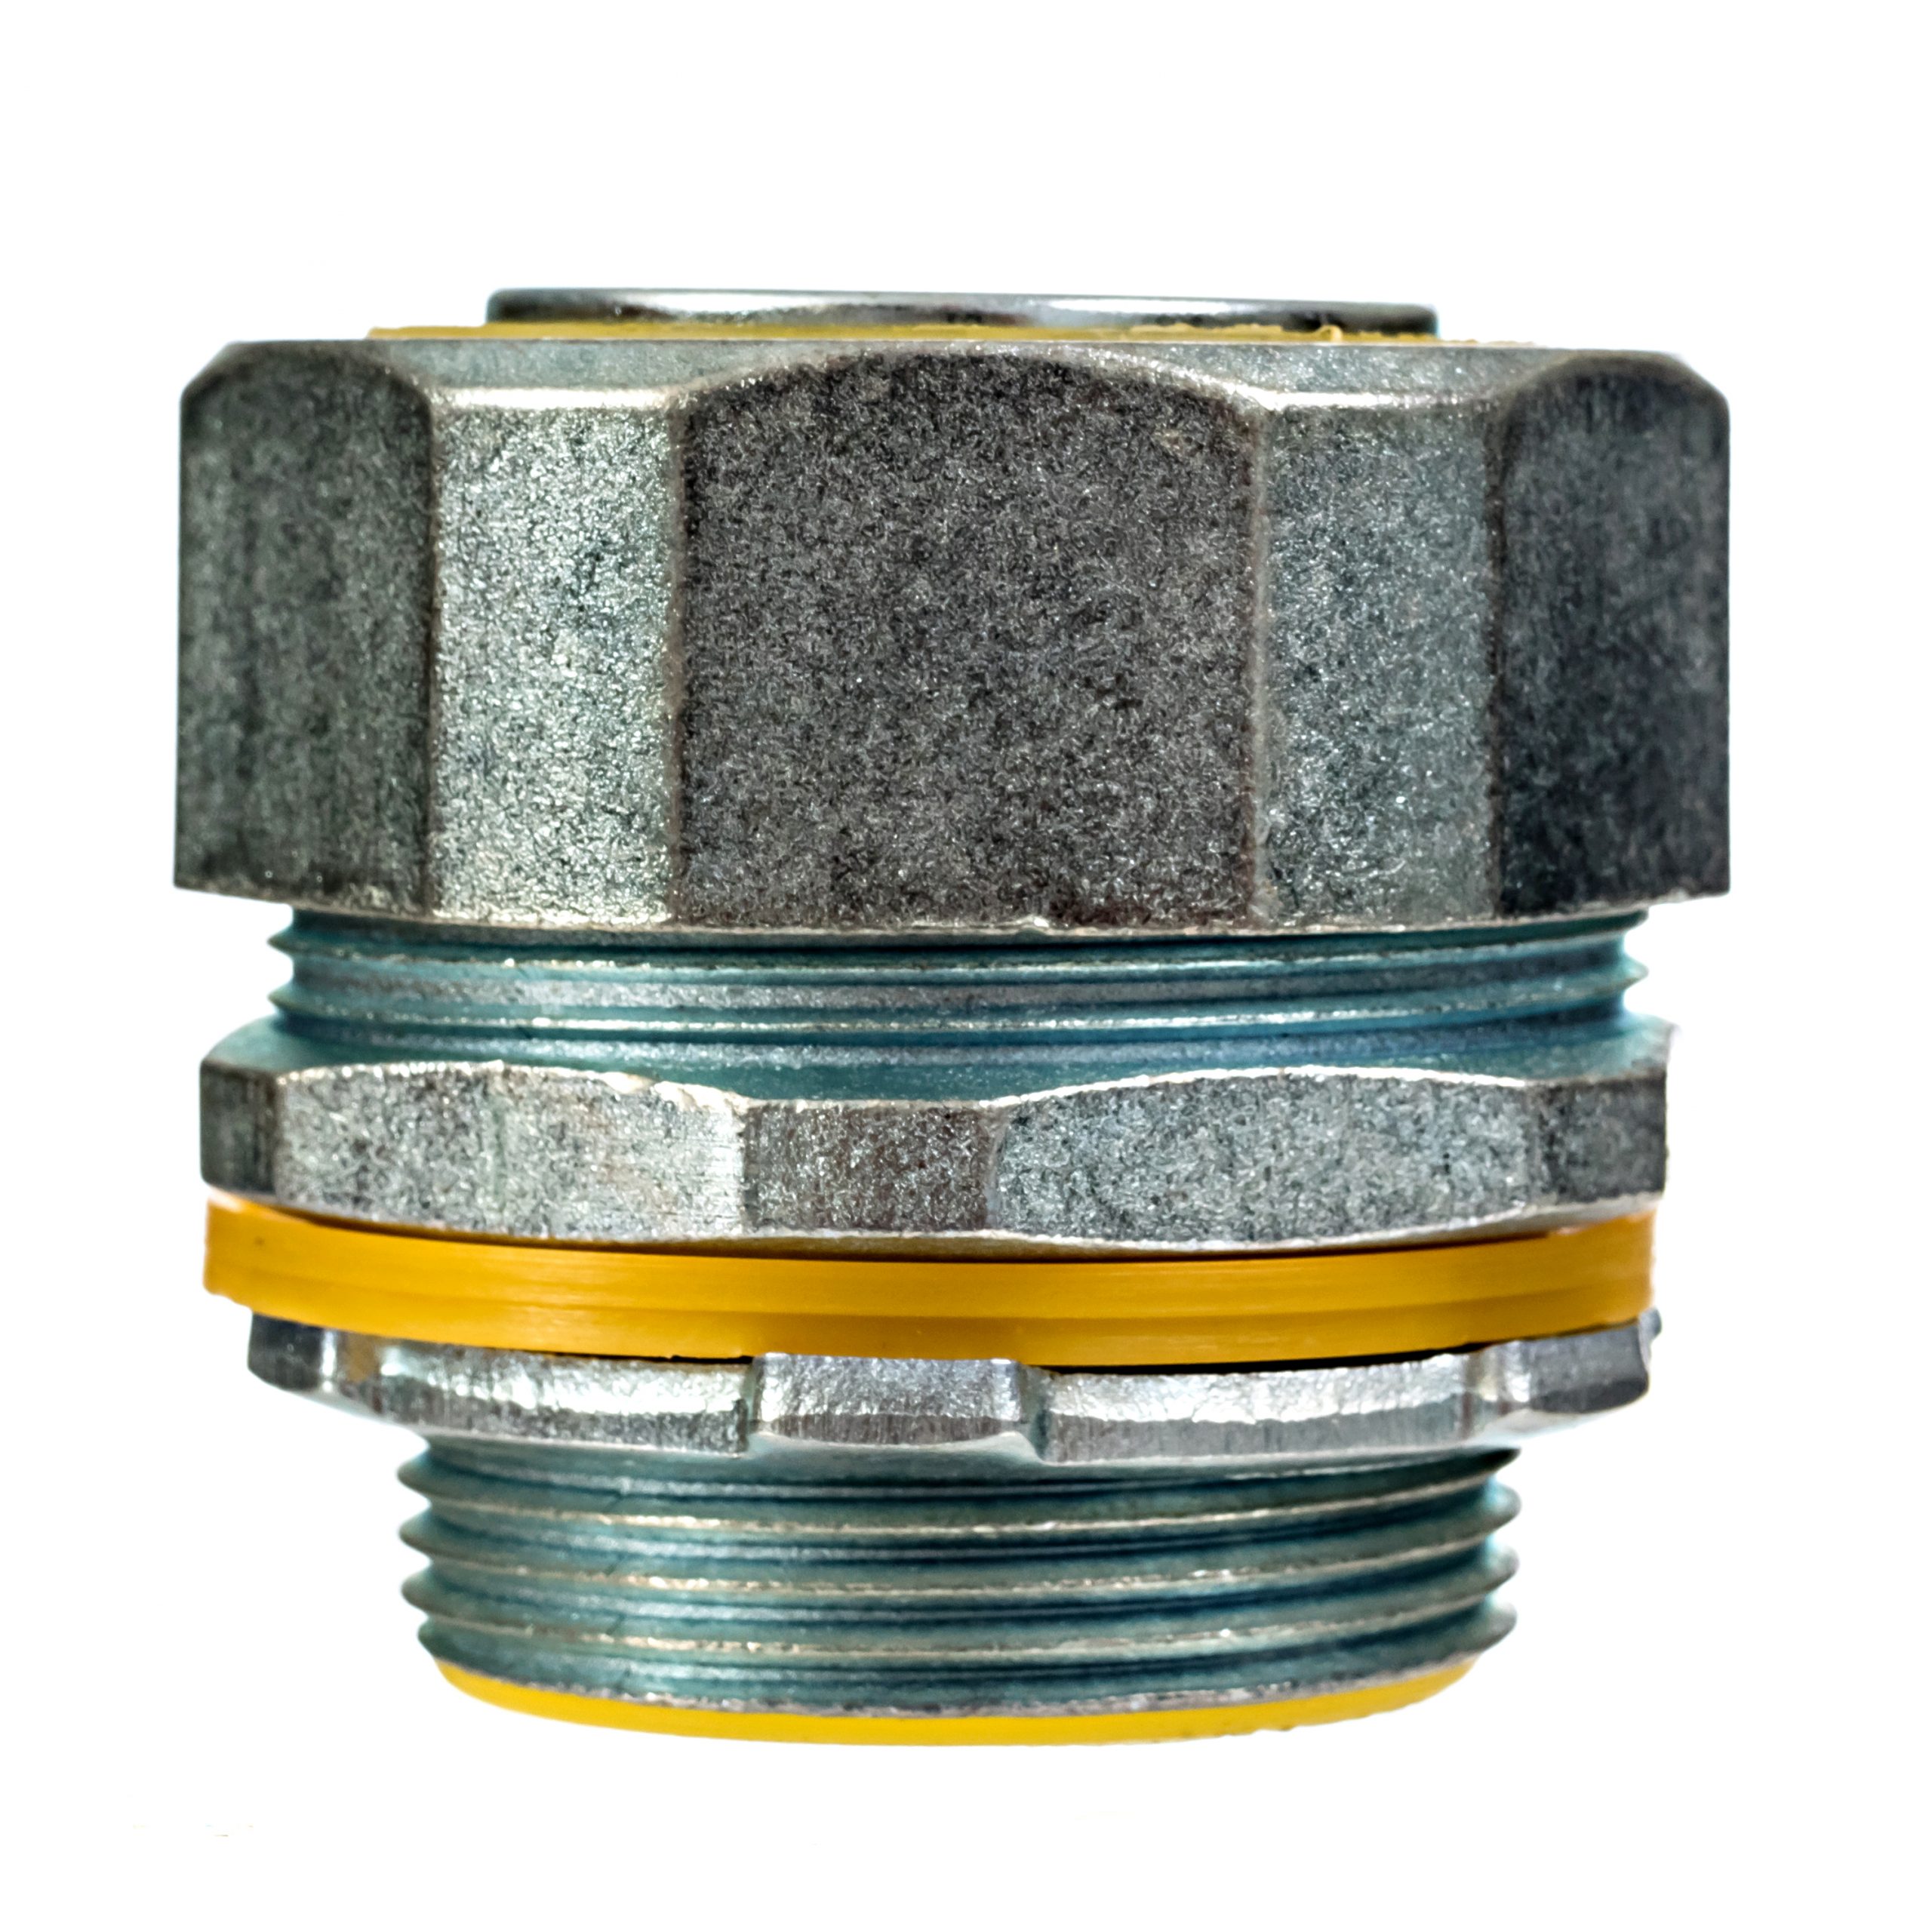 Appleton CG-137125 1-1/4 Liquidtight Strain Relief Cord/Cable Connector